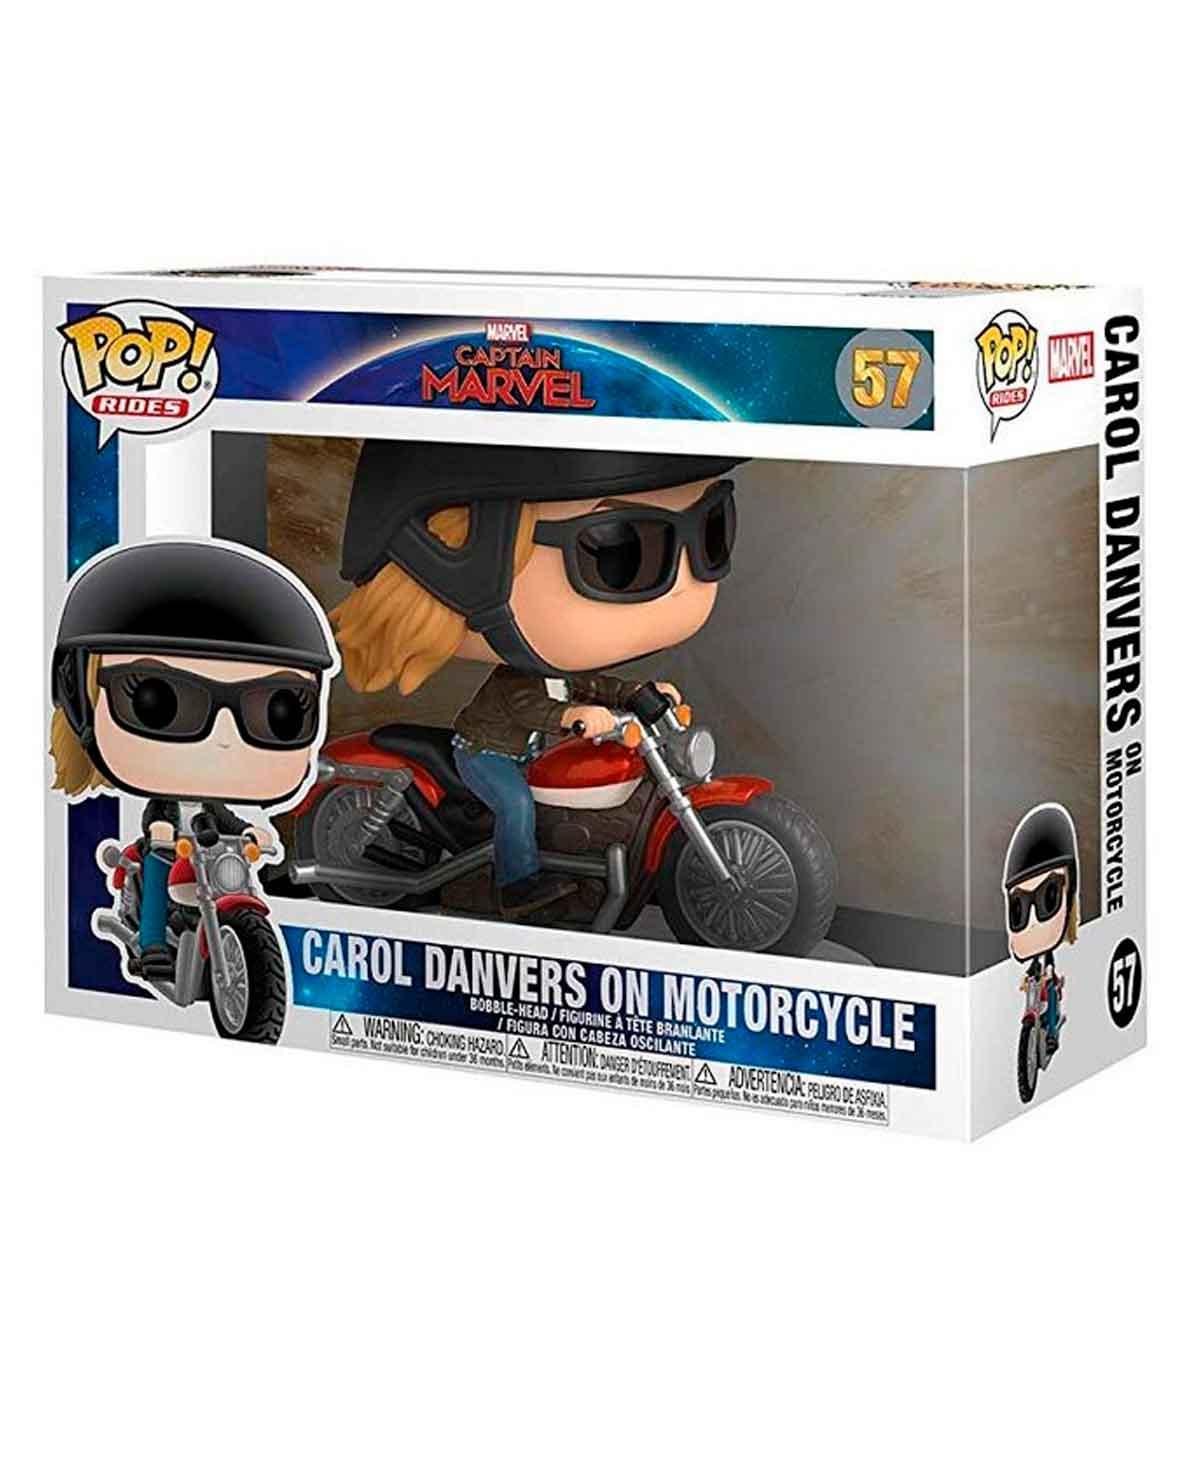 Pop! Rides - Marvel - Carol Danvers On Motorcycle - #57 - Hobby Champion Inc